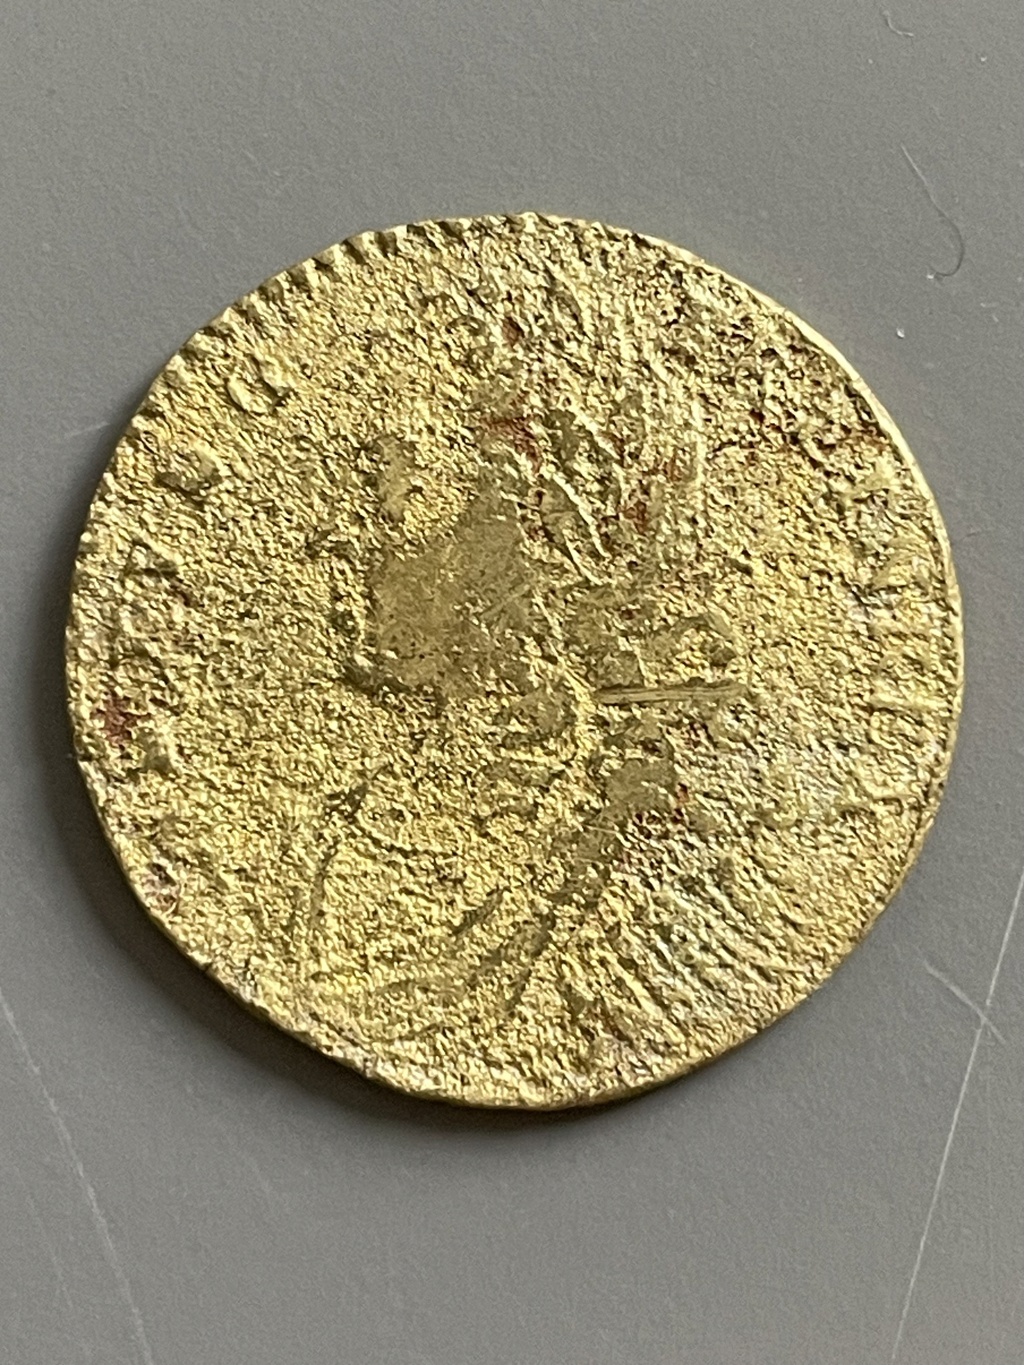 Monnaie / jeton royal(e) en or?  Img_7331